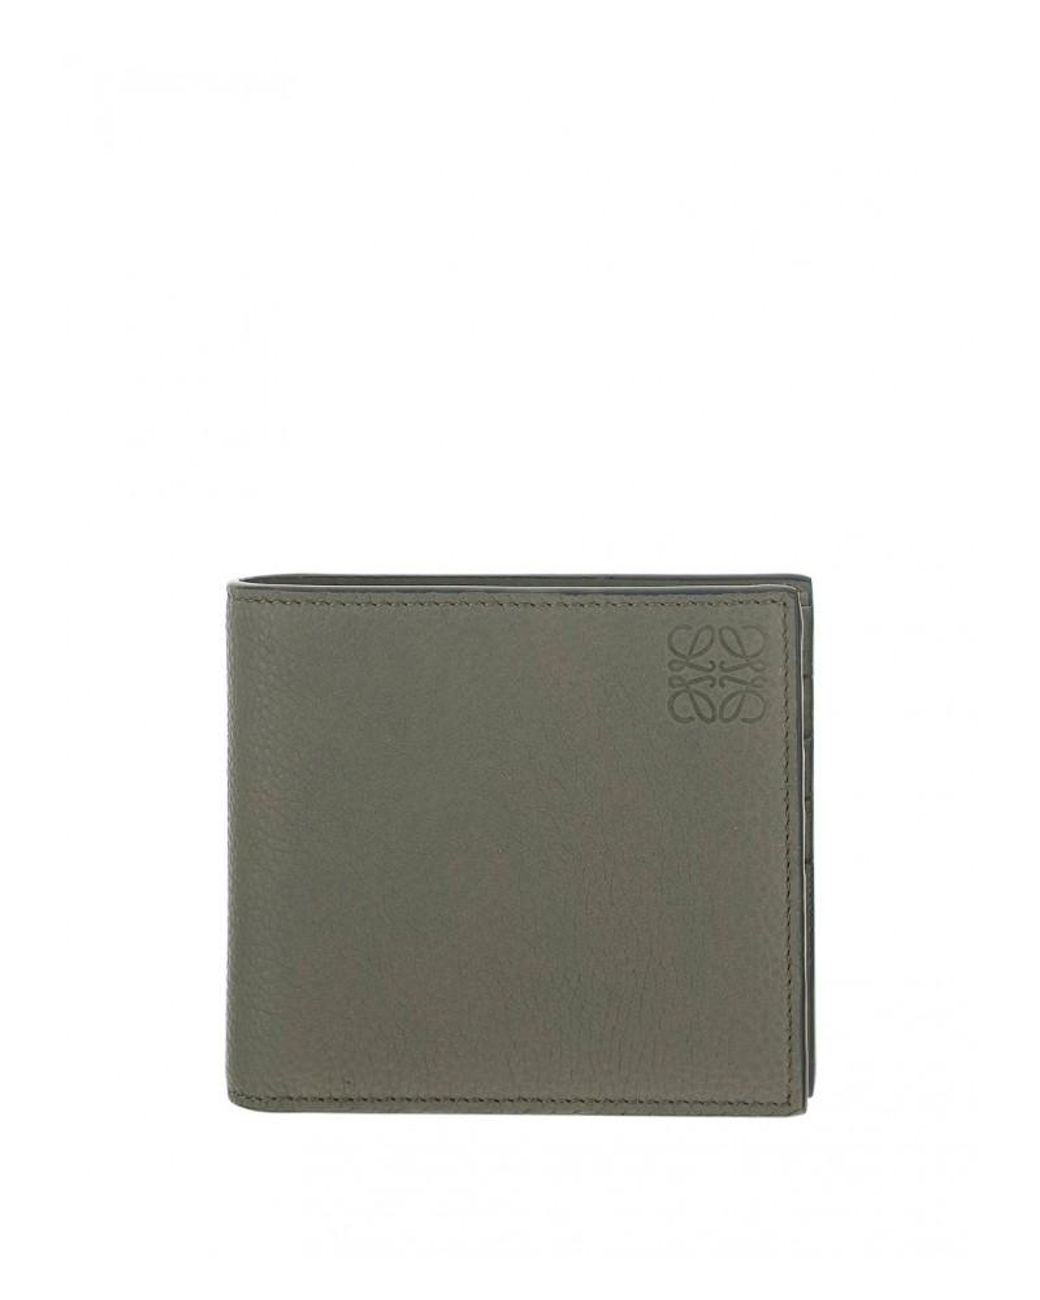 Loewe Leather Wallet in Green for Men | Lyst